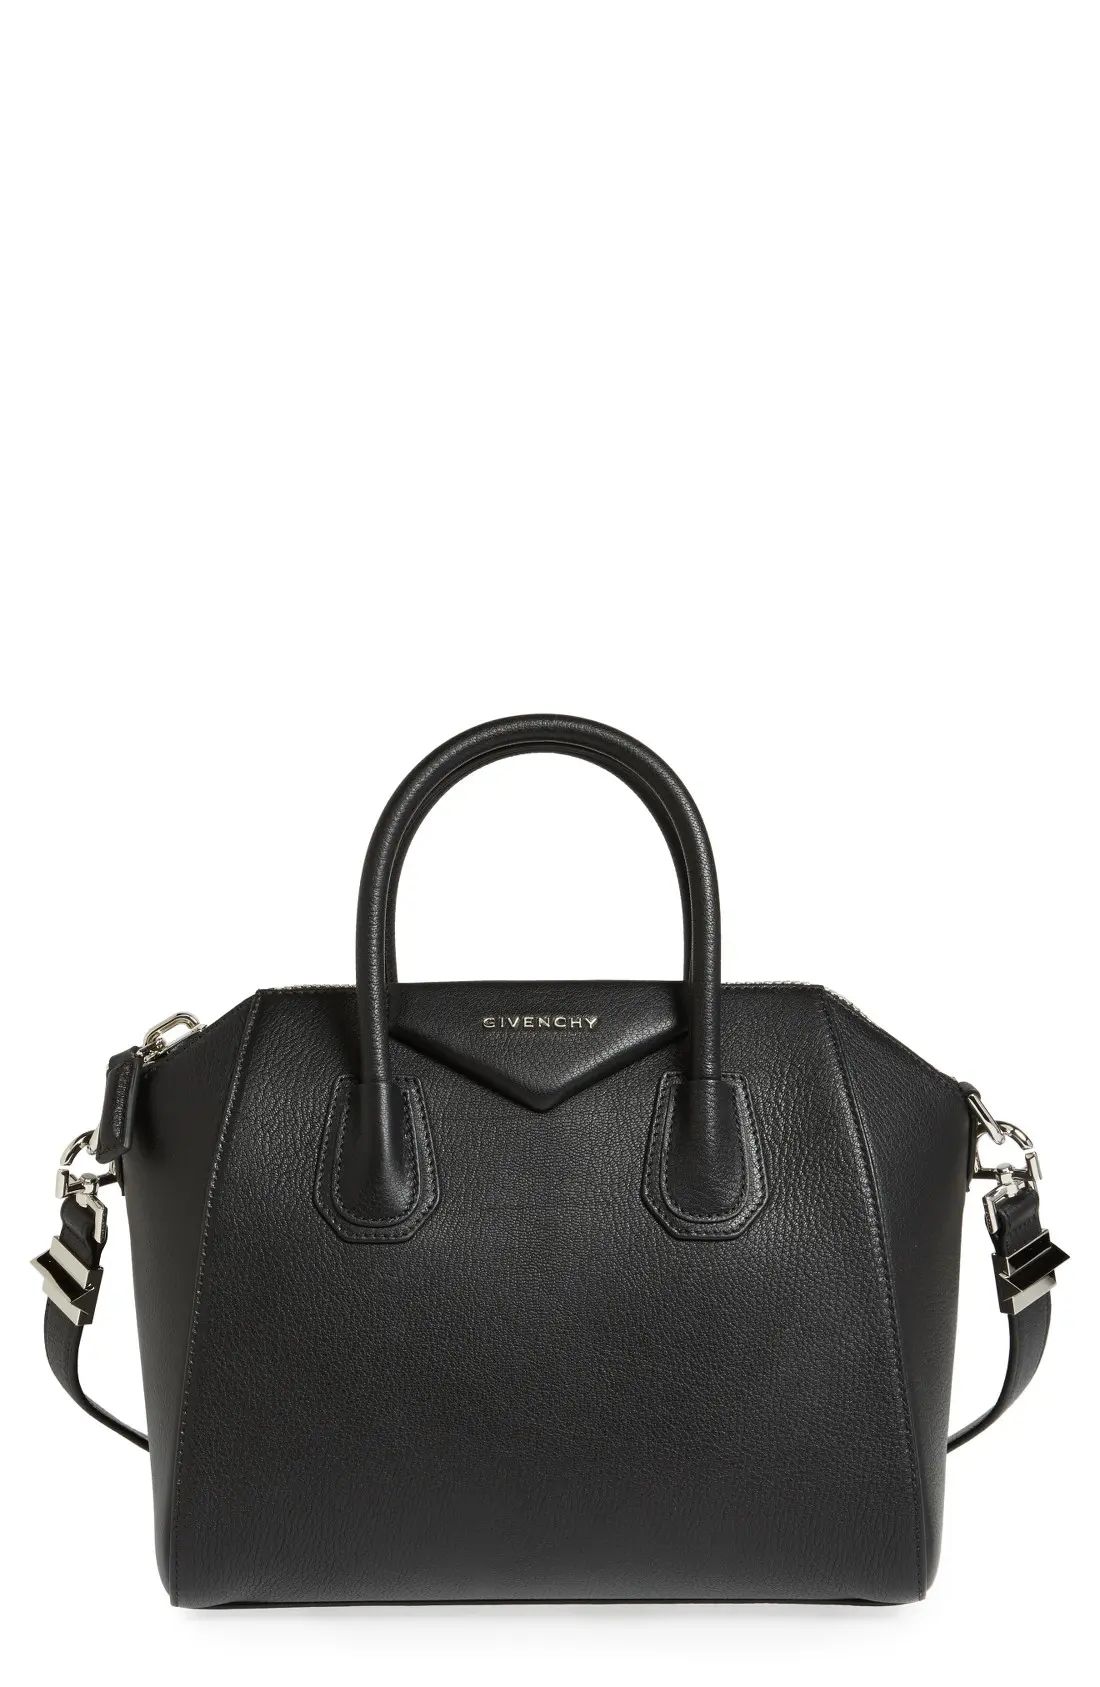 Givenchy 'Small Antigona' Leather Satchel | Nordstrom